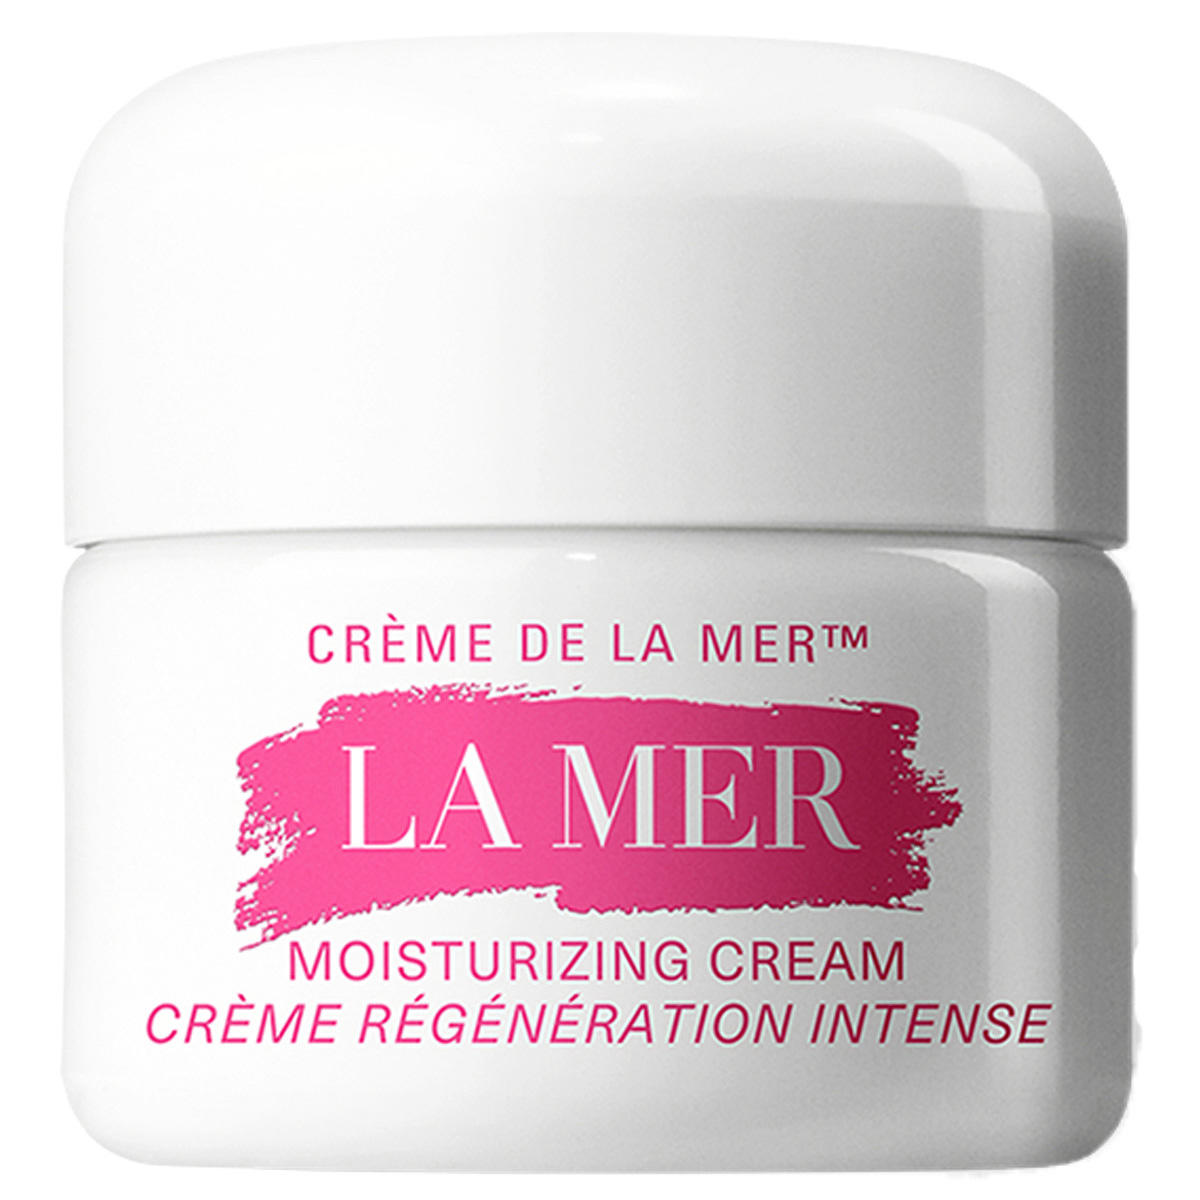 La Mer BCC The Moisturizing Creme 15 ml online kaufen | baslerbeauty